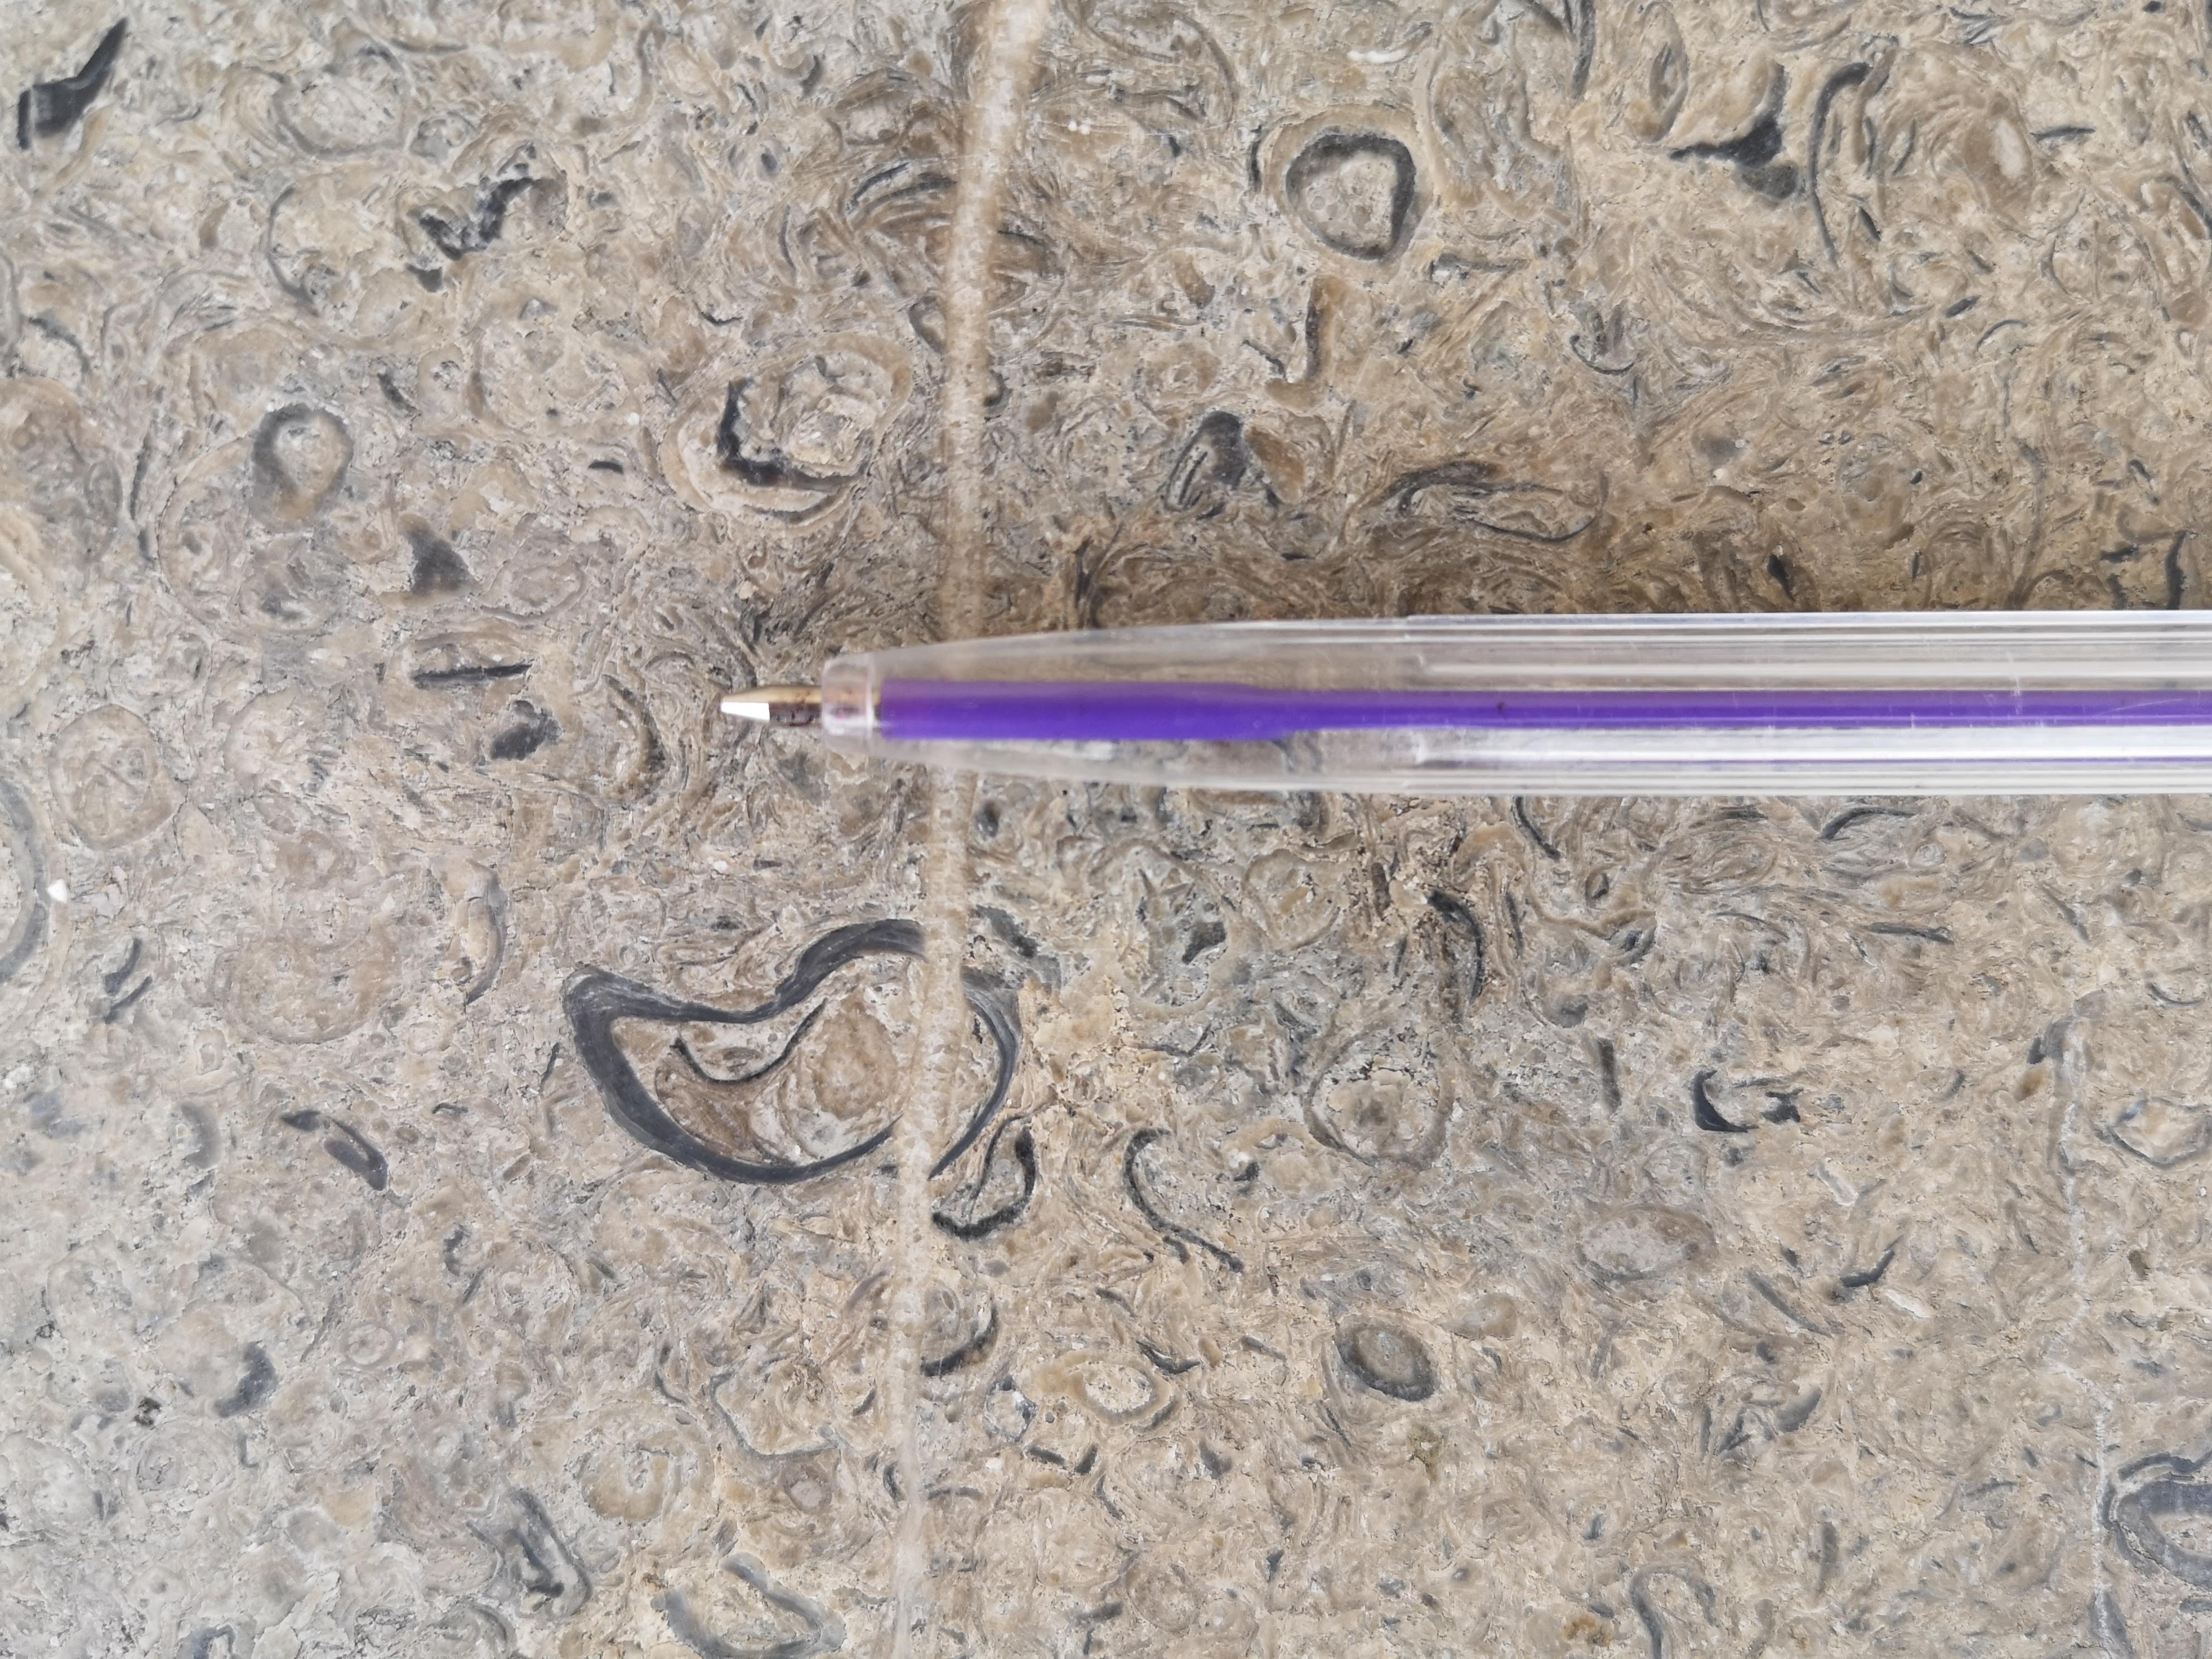 fossiliforous limestone with purple biro pen